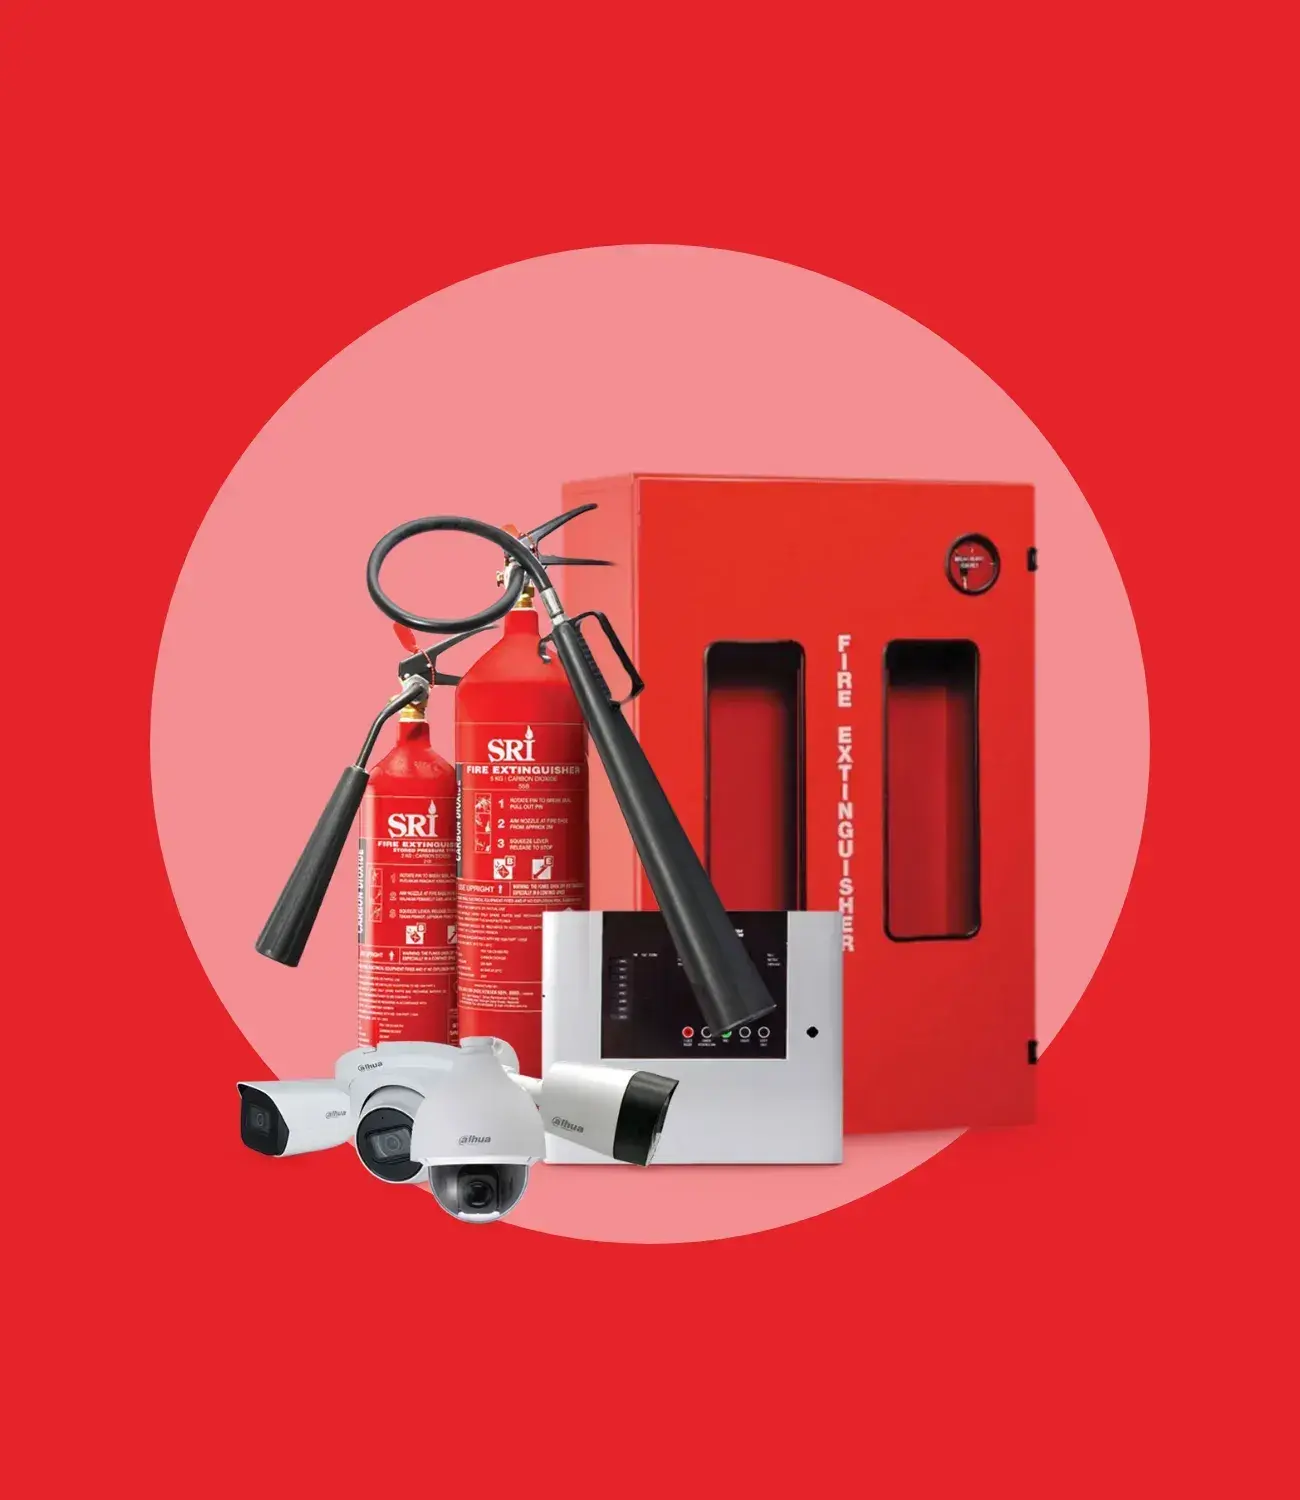 Agni fire extinguishers and smoke detectors